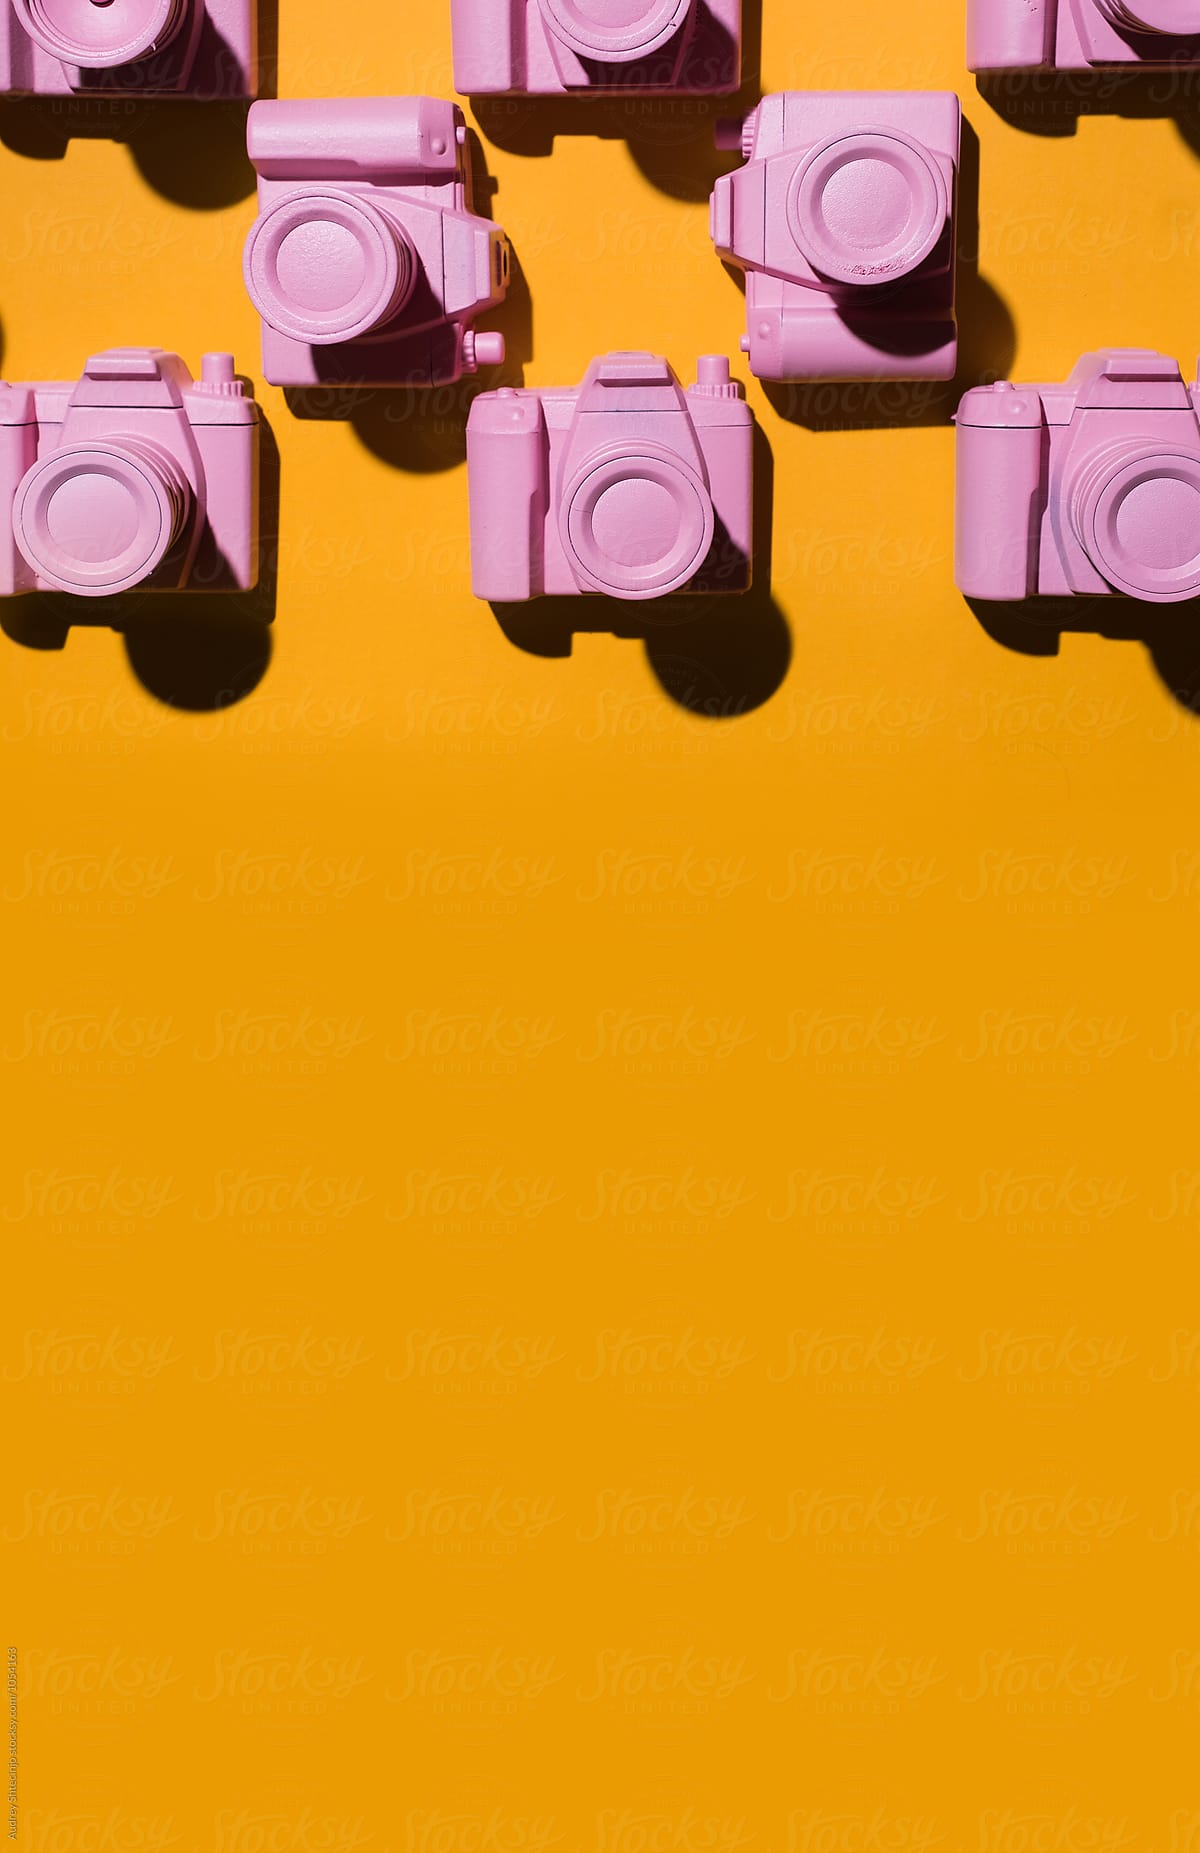 Pink cameras arranged on orange/yellow background.